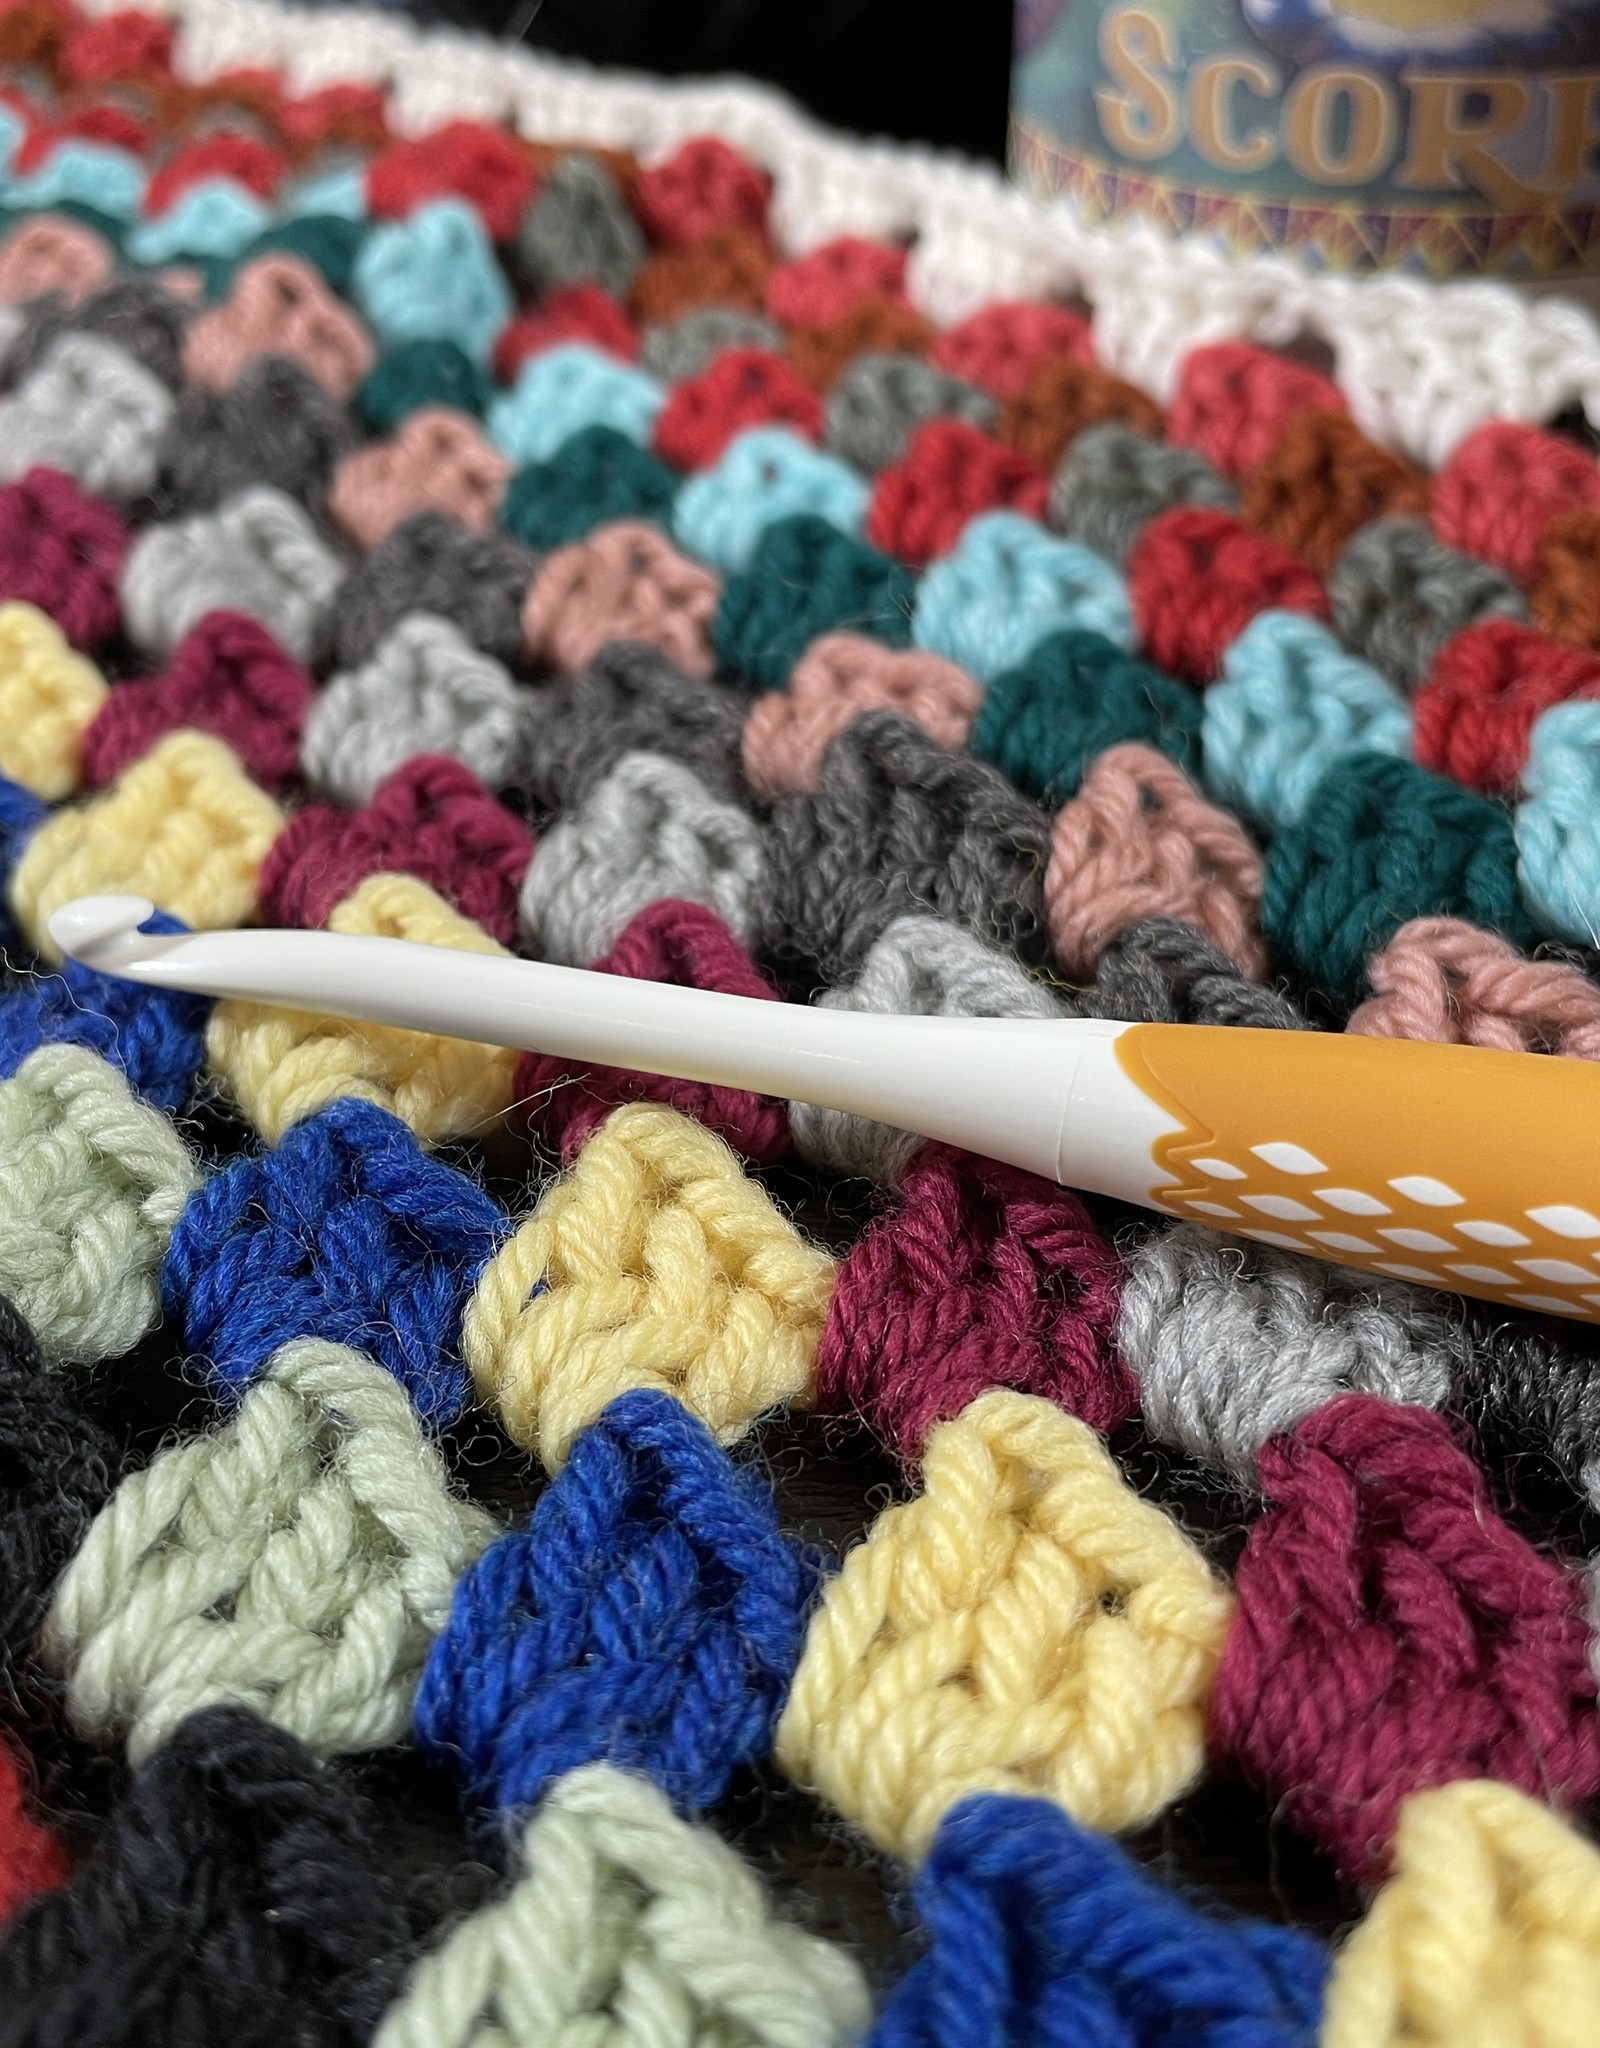 Prym crochet hooks, synthetic